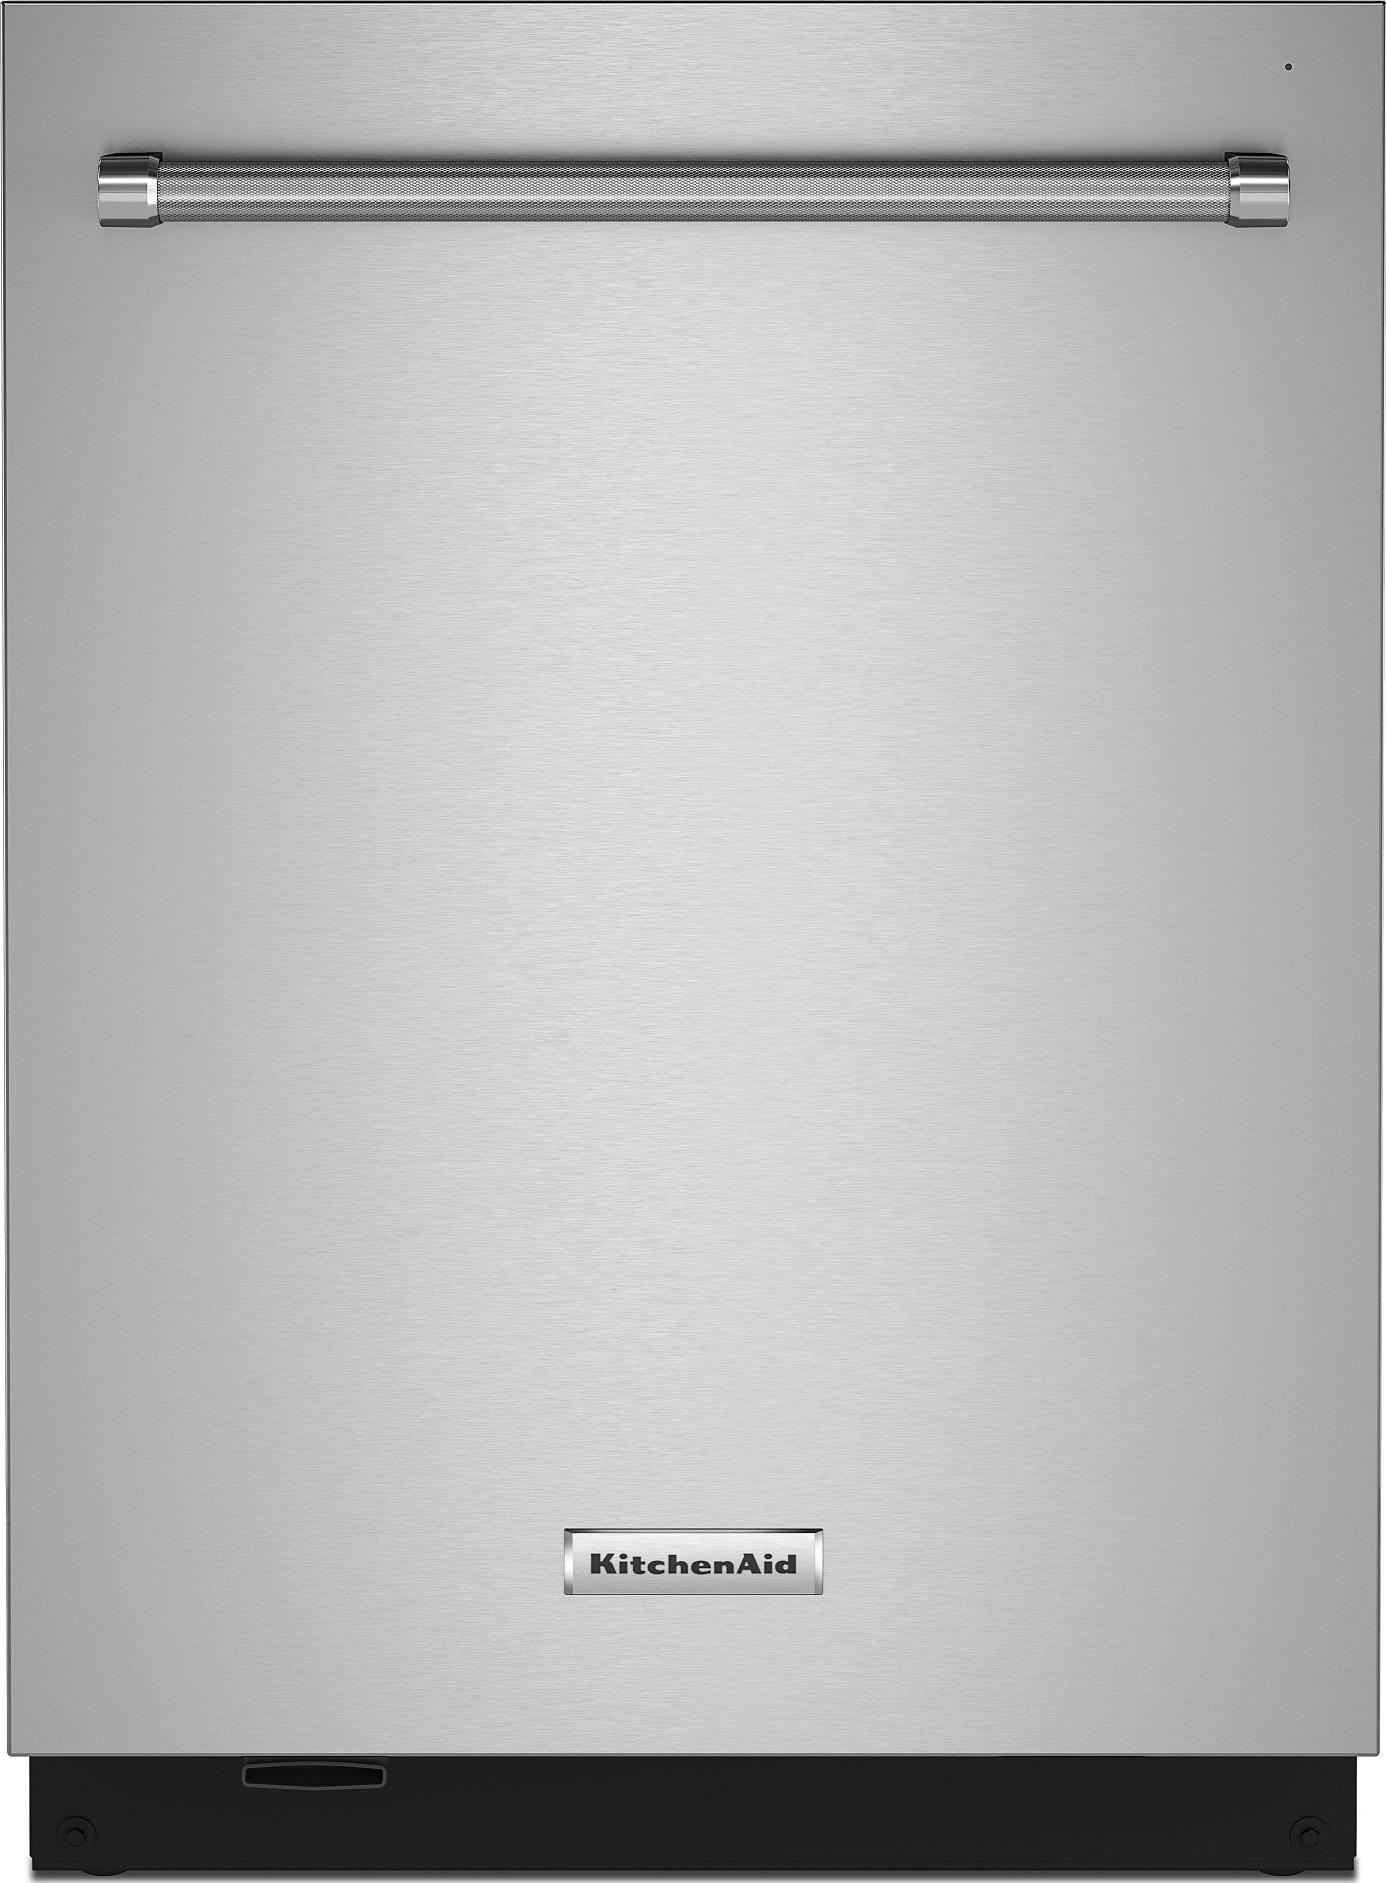 kitchenaid-dishwasher-rebate-major-appliances-electronic-express-1